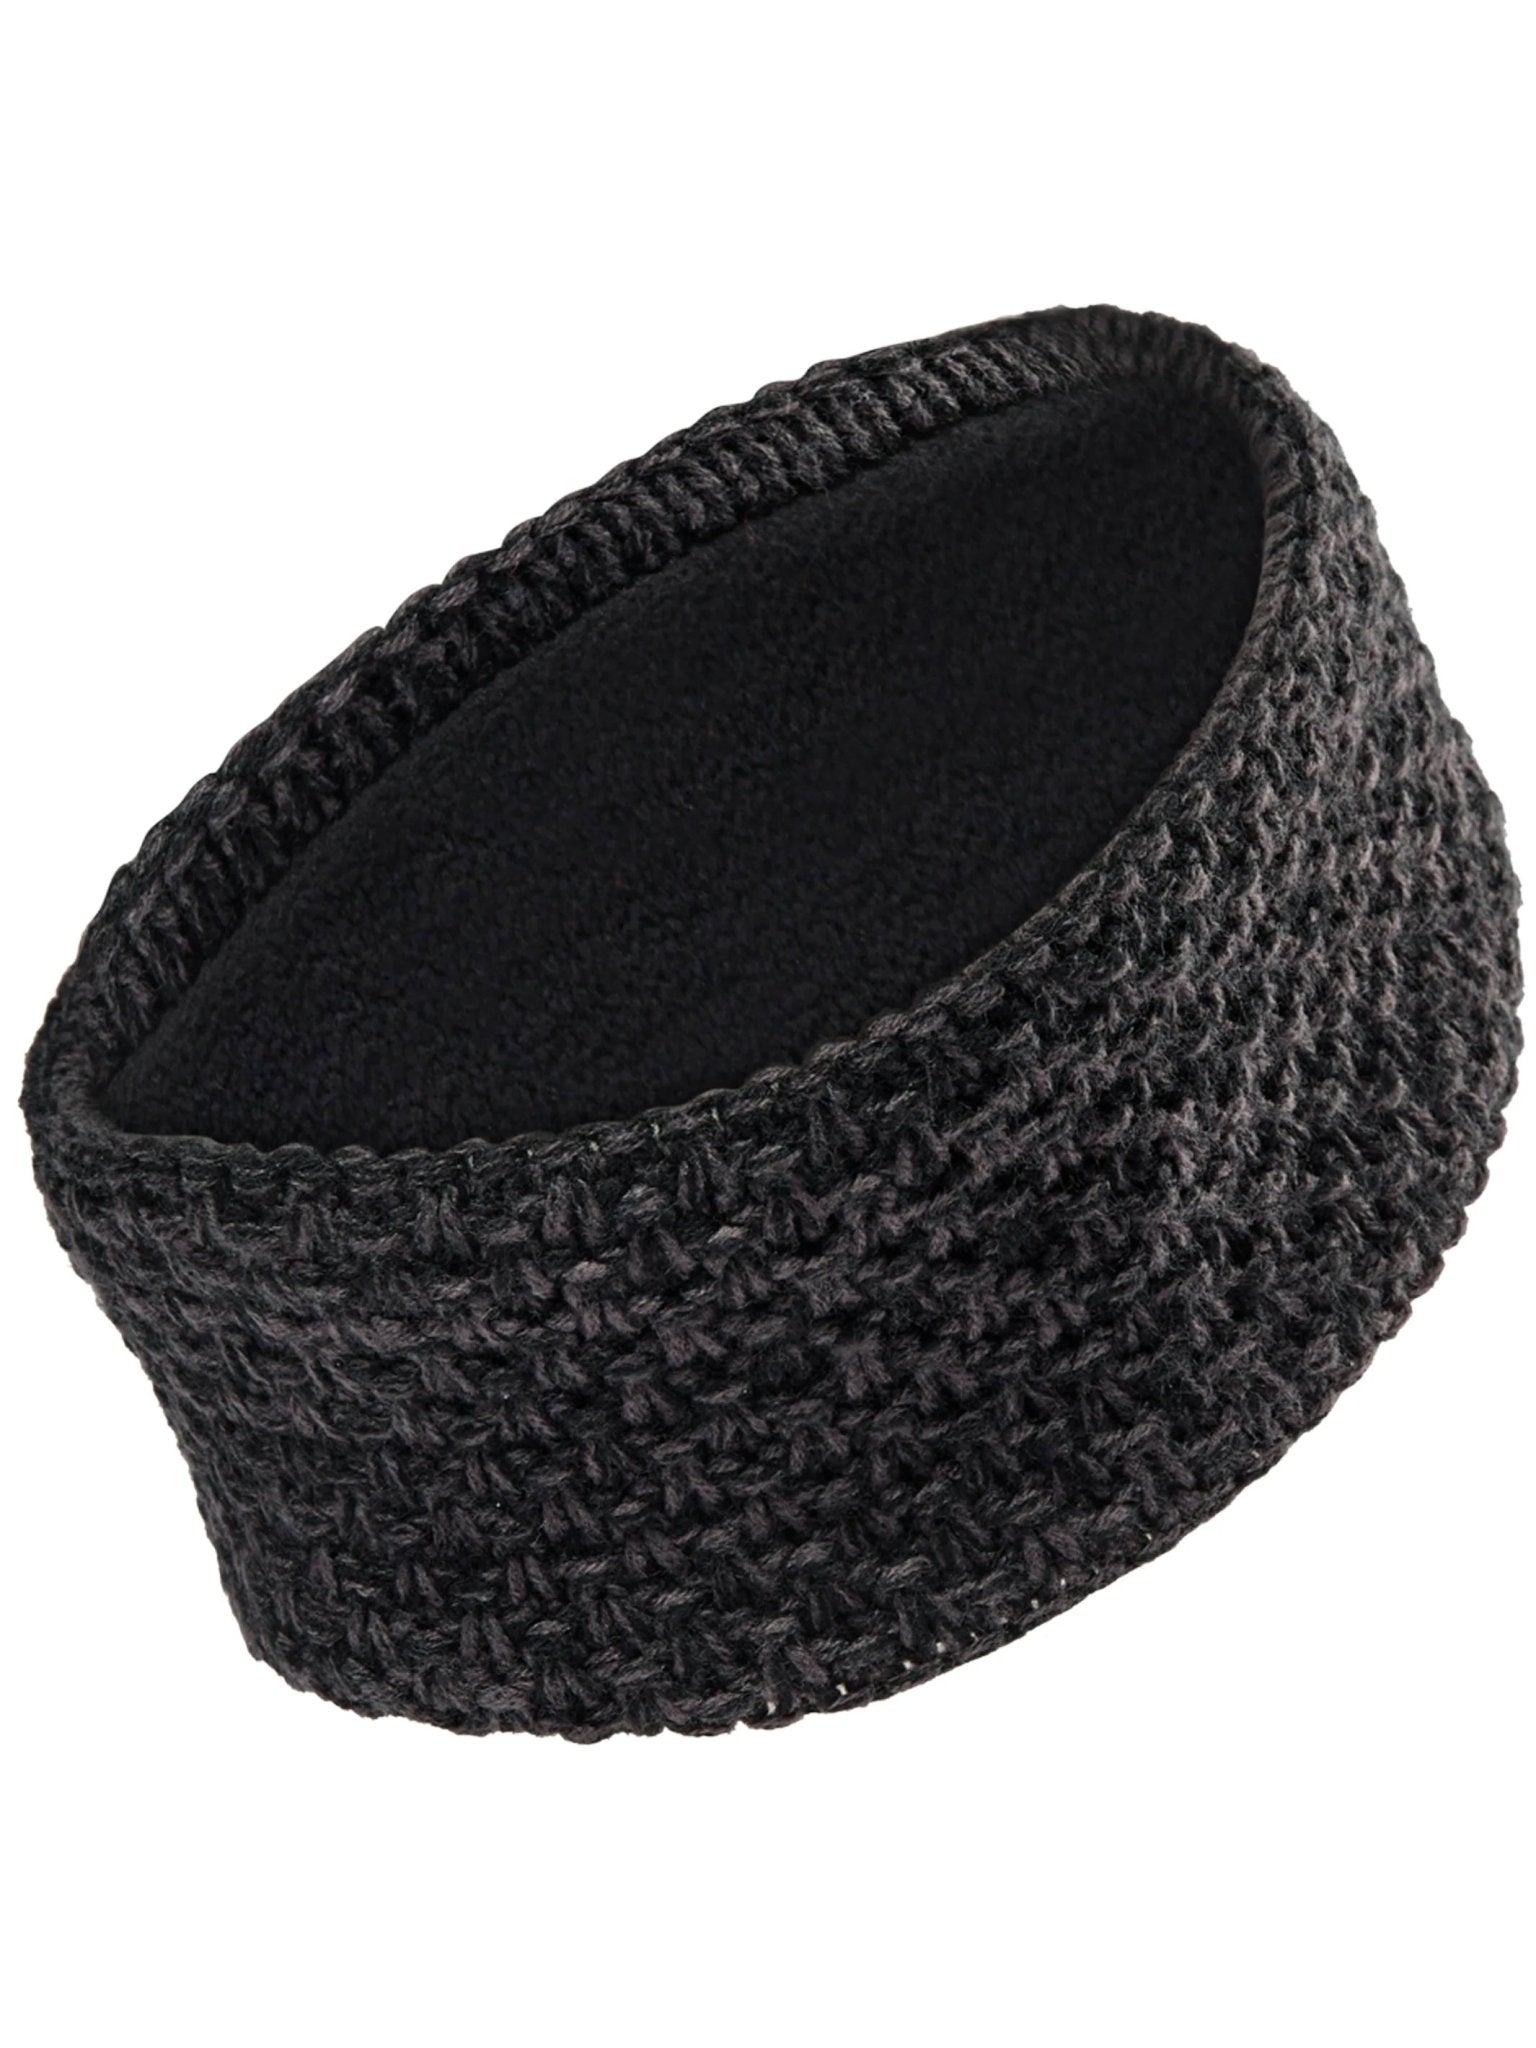 4elementsclothingDeerhunterDeerhunter - Ladies knitted Headband country HeadbandLadies Headwear6487-999